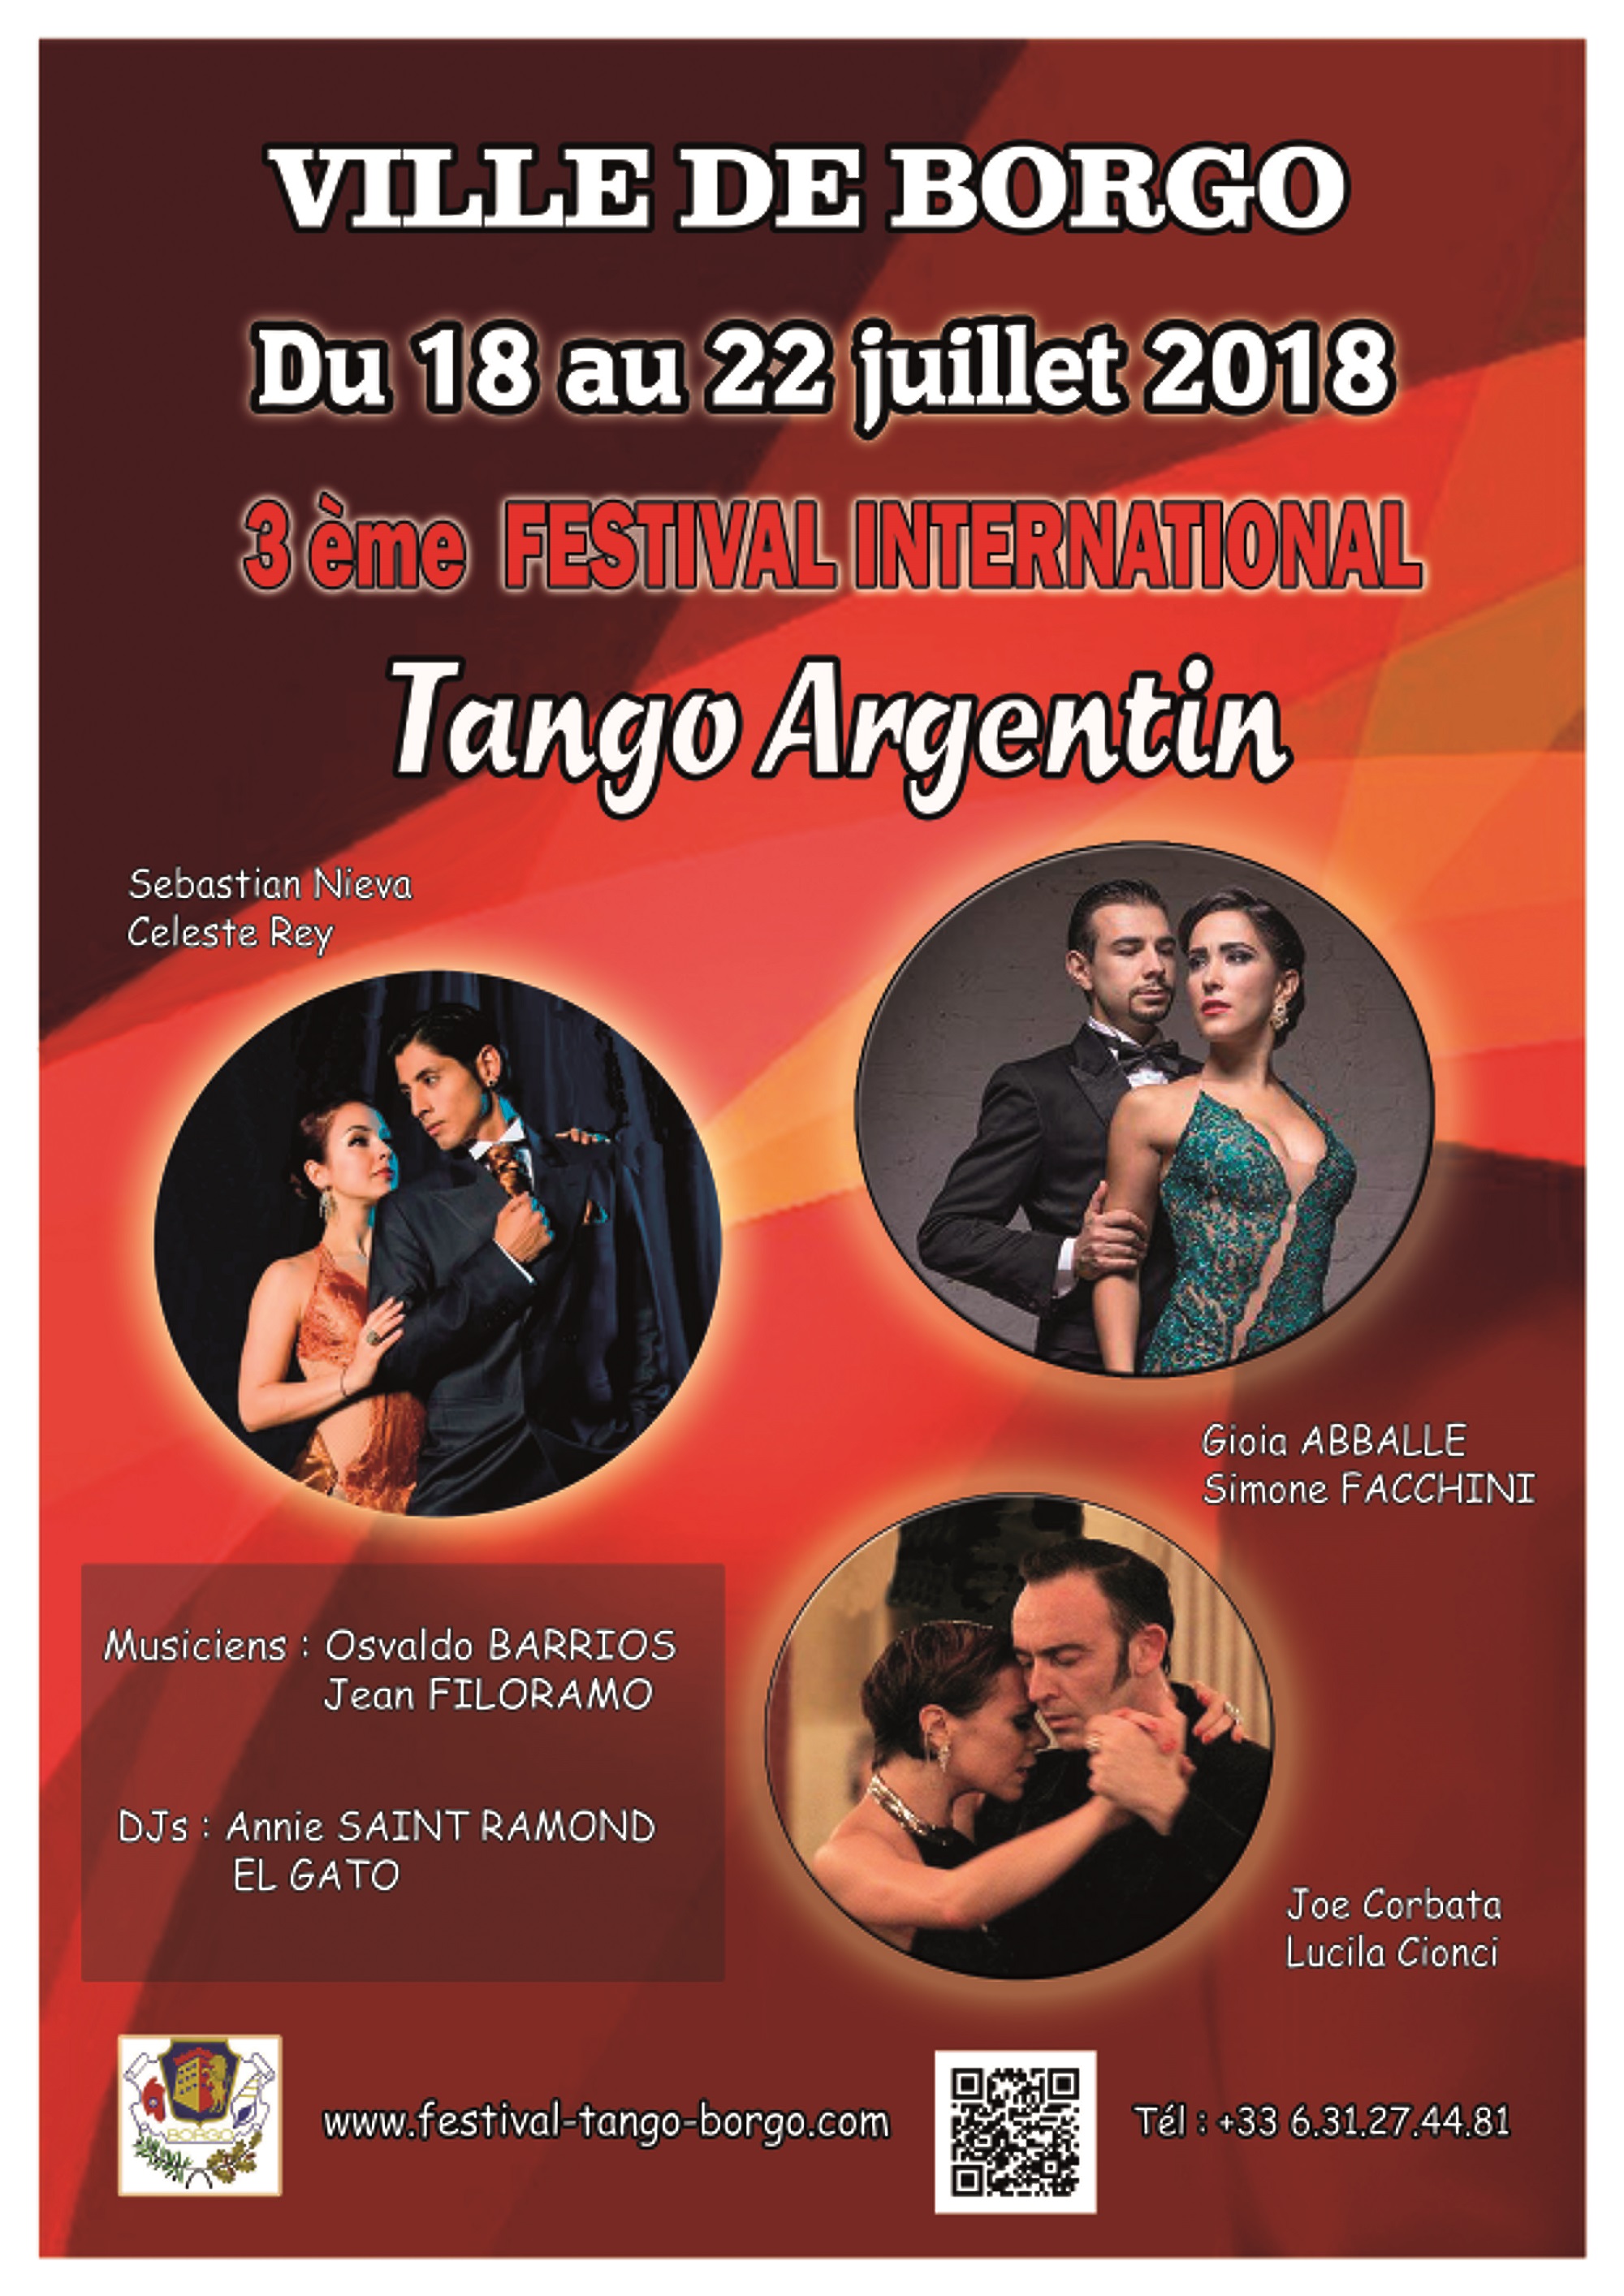 Borgo : L’excellence au Festival international de tango argentin